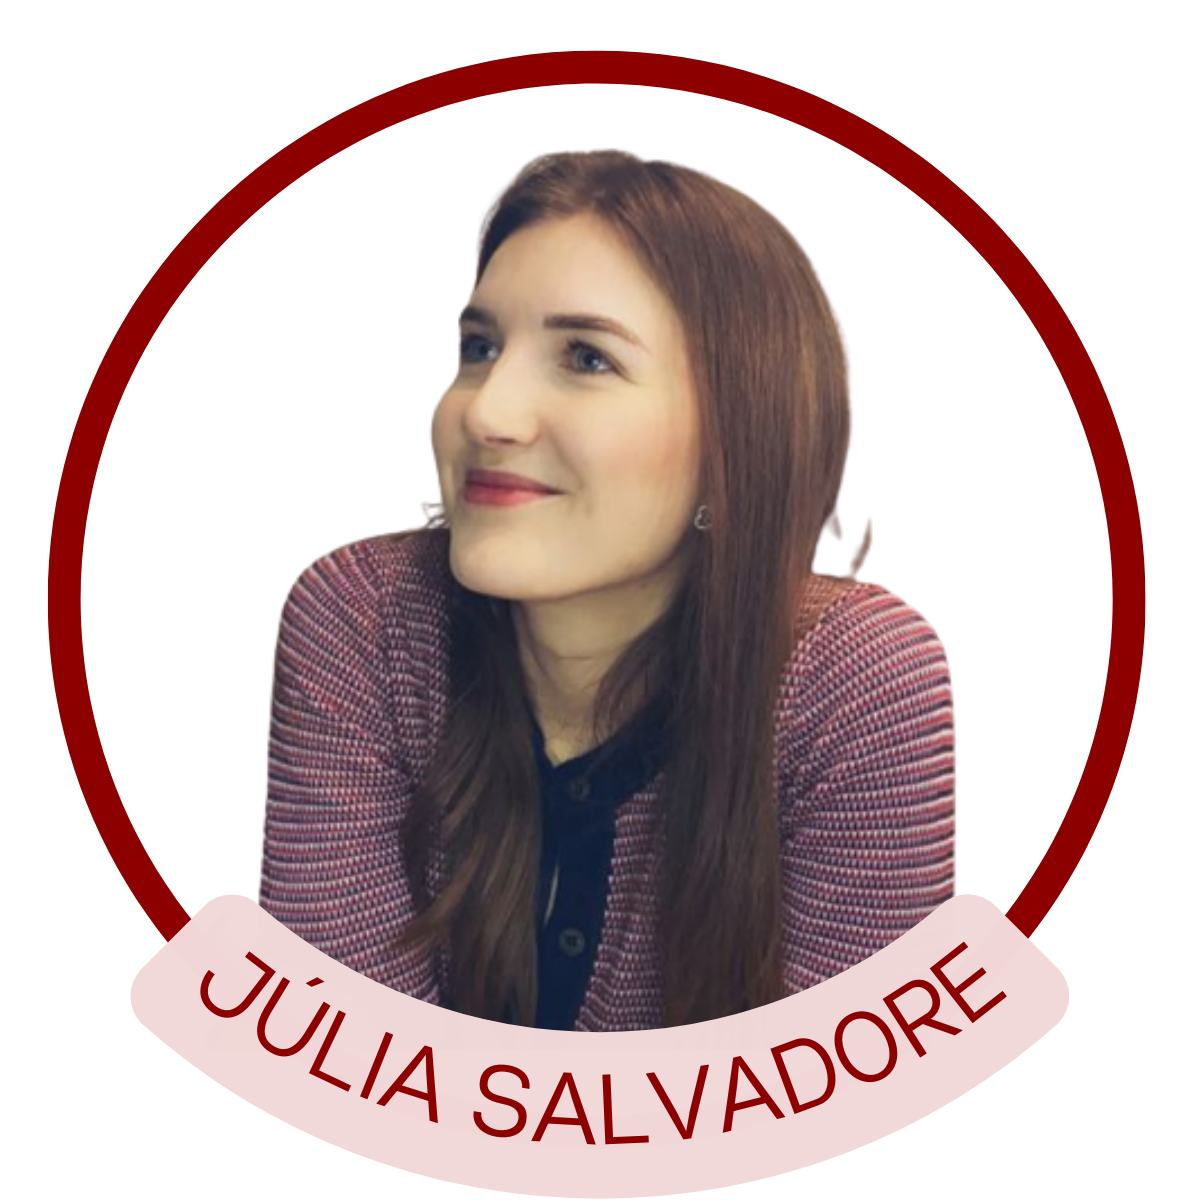 Julia Salvadore Cadore Cadore